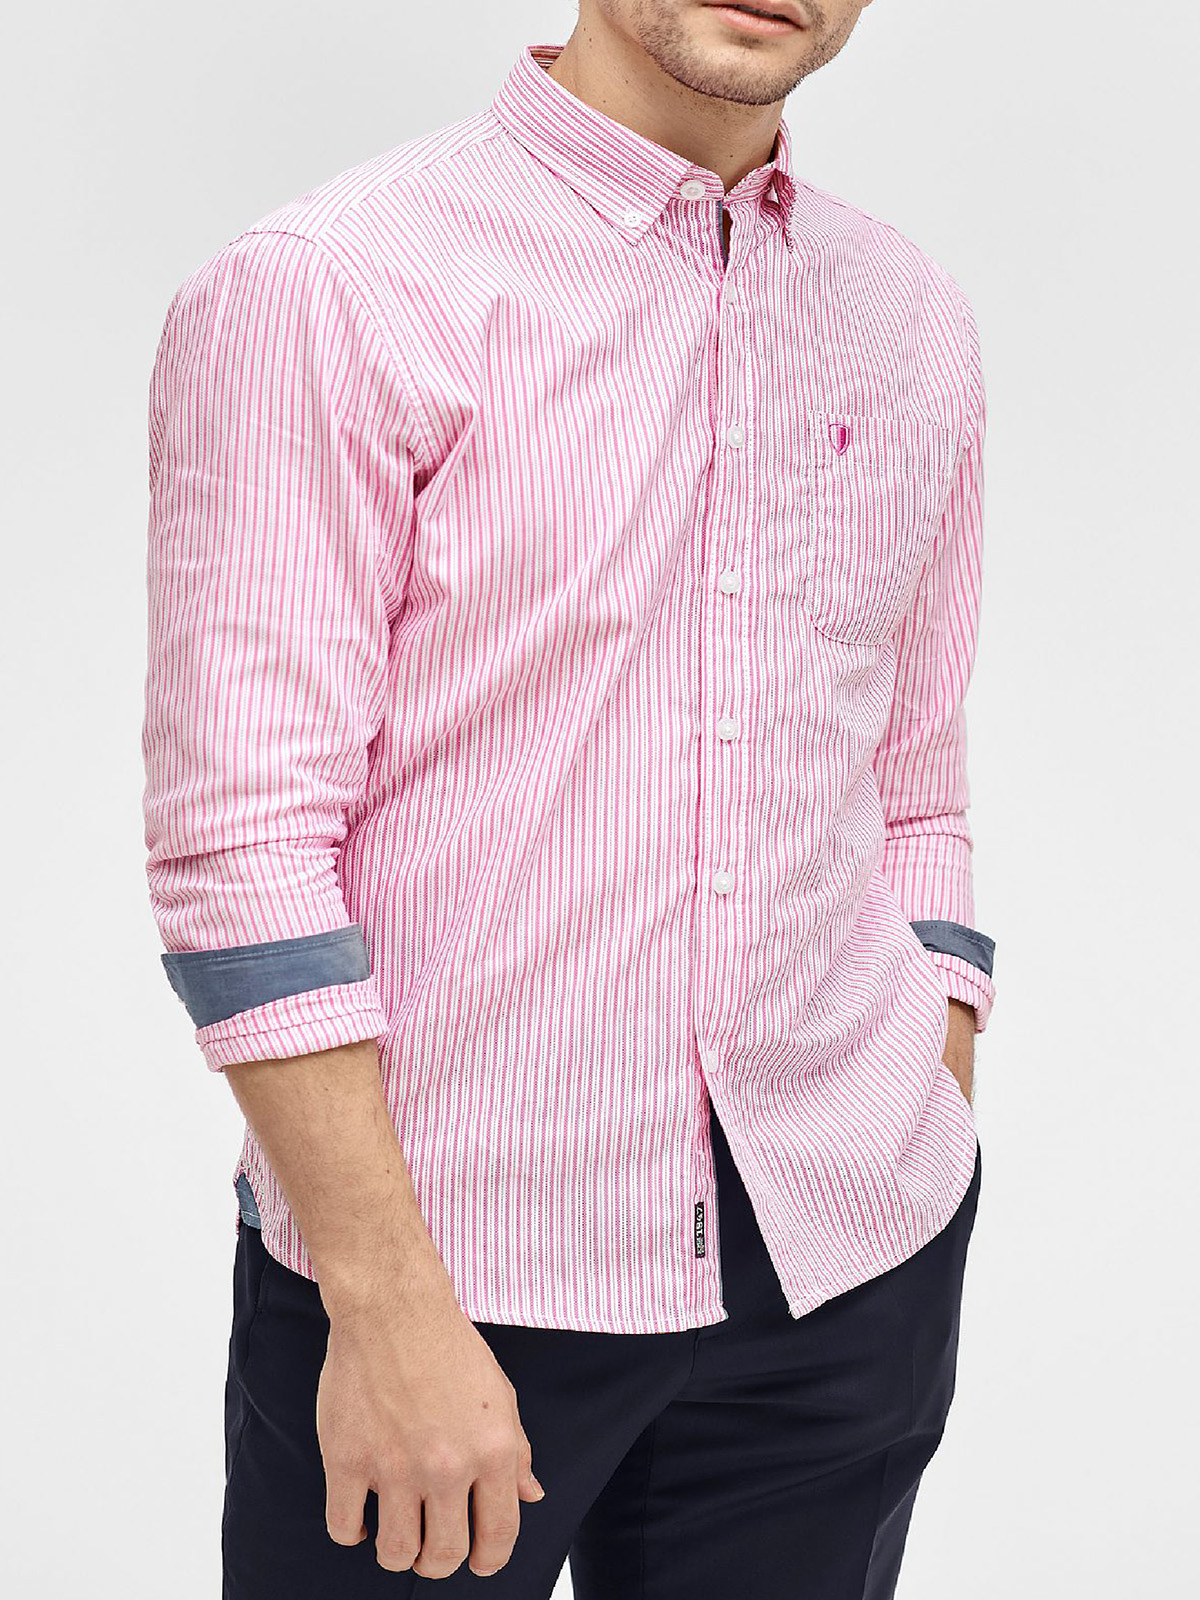 Ellos - - ELLOS PINK Mens Button Down Collar Striped Shirt - Plus Size ...